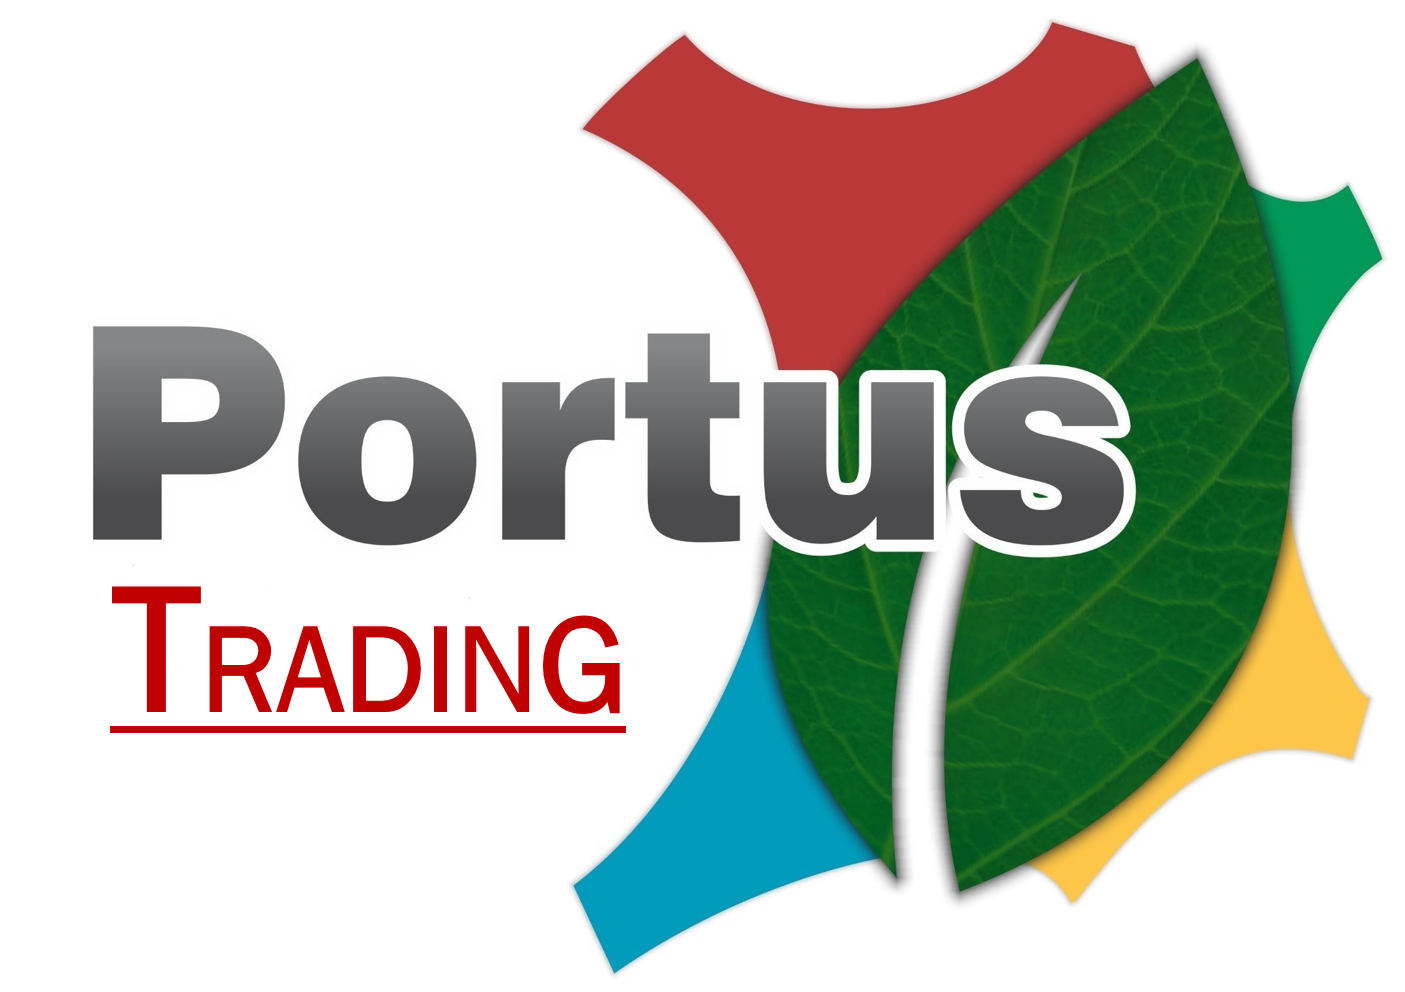 Portus Trading